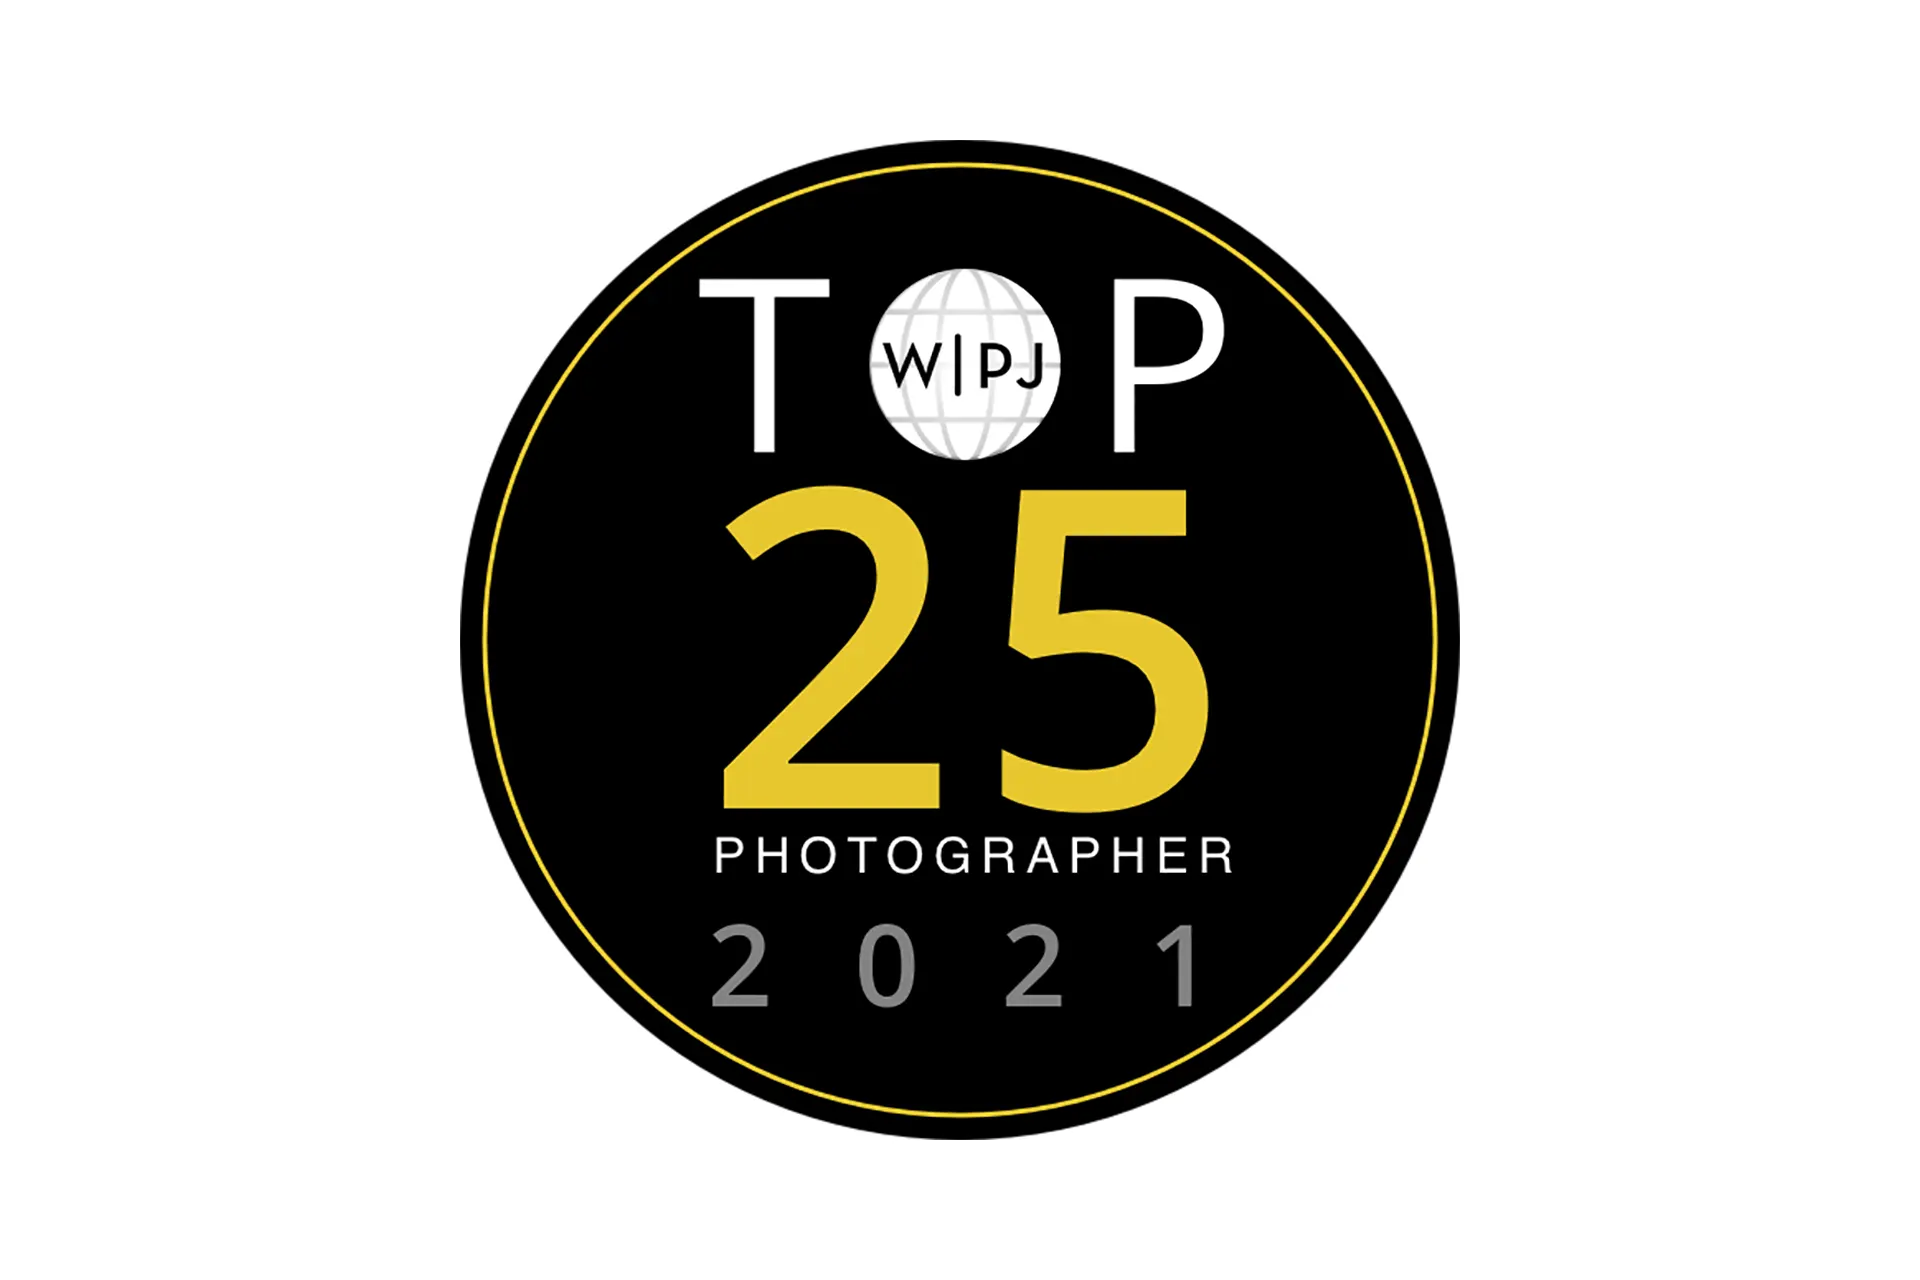 Top 25 photographer 2021